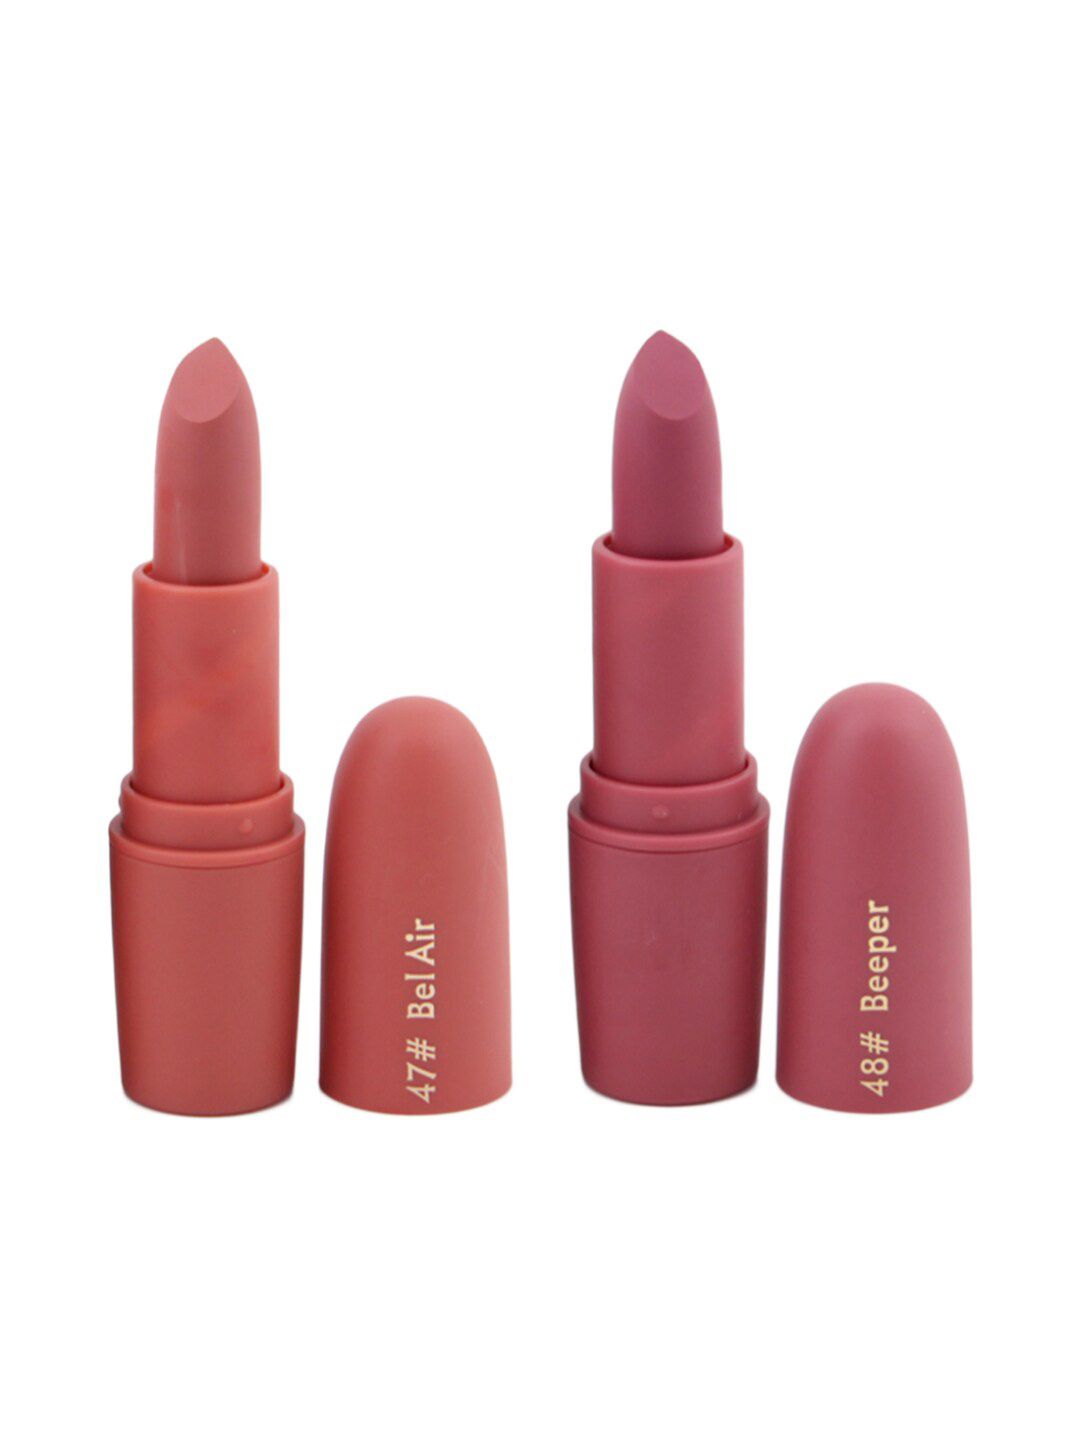 MISS ROSE Set of 2 Matte Creamy Lipsticks - Bel Air 47 & Beeper 48 Price in India